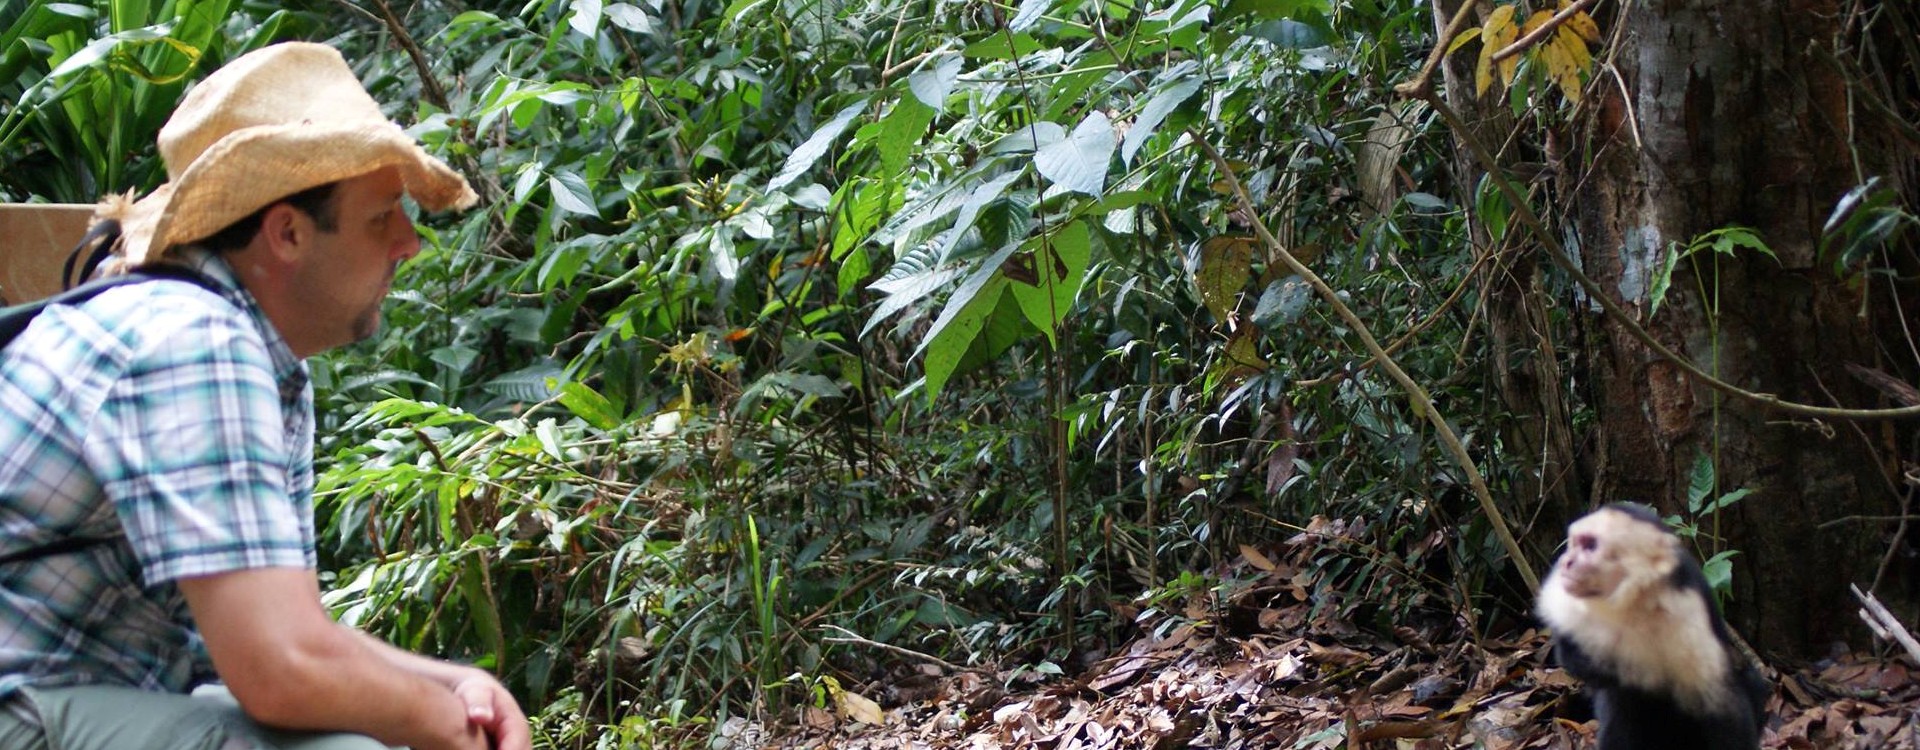 ENJOY COSTA RICA'S AMAZING WILDLIFE & NATIONAL PARKS